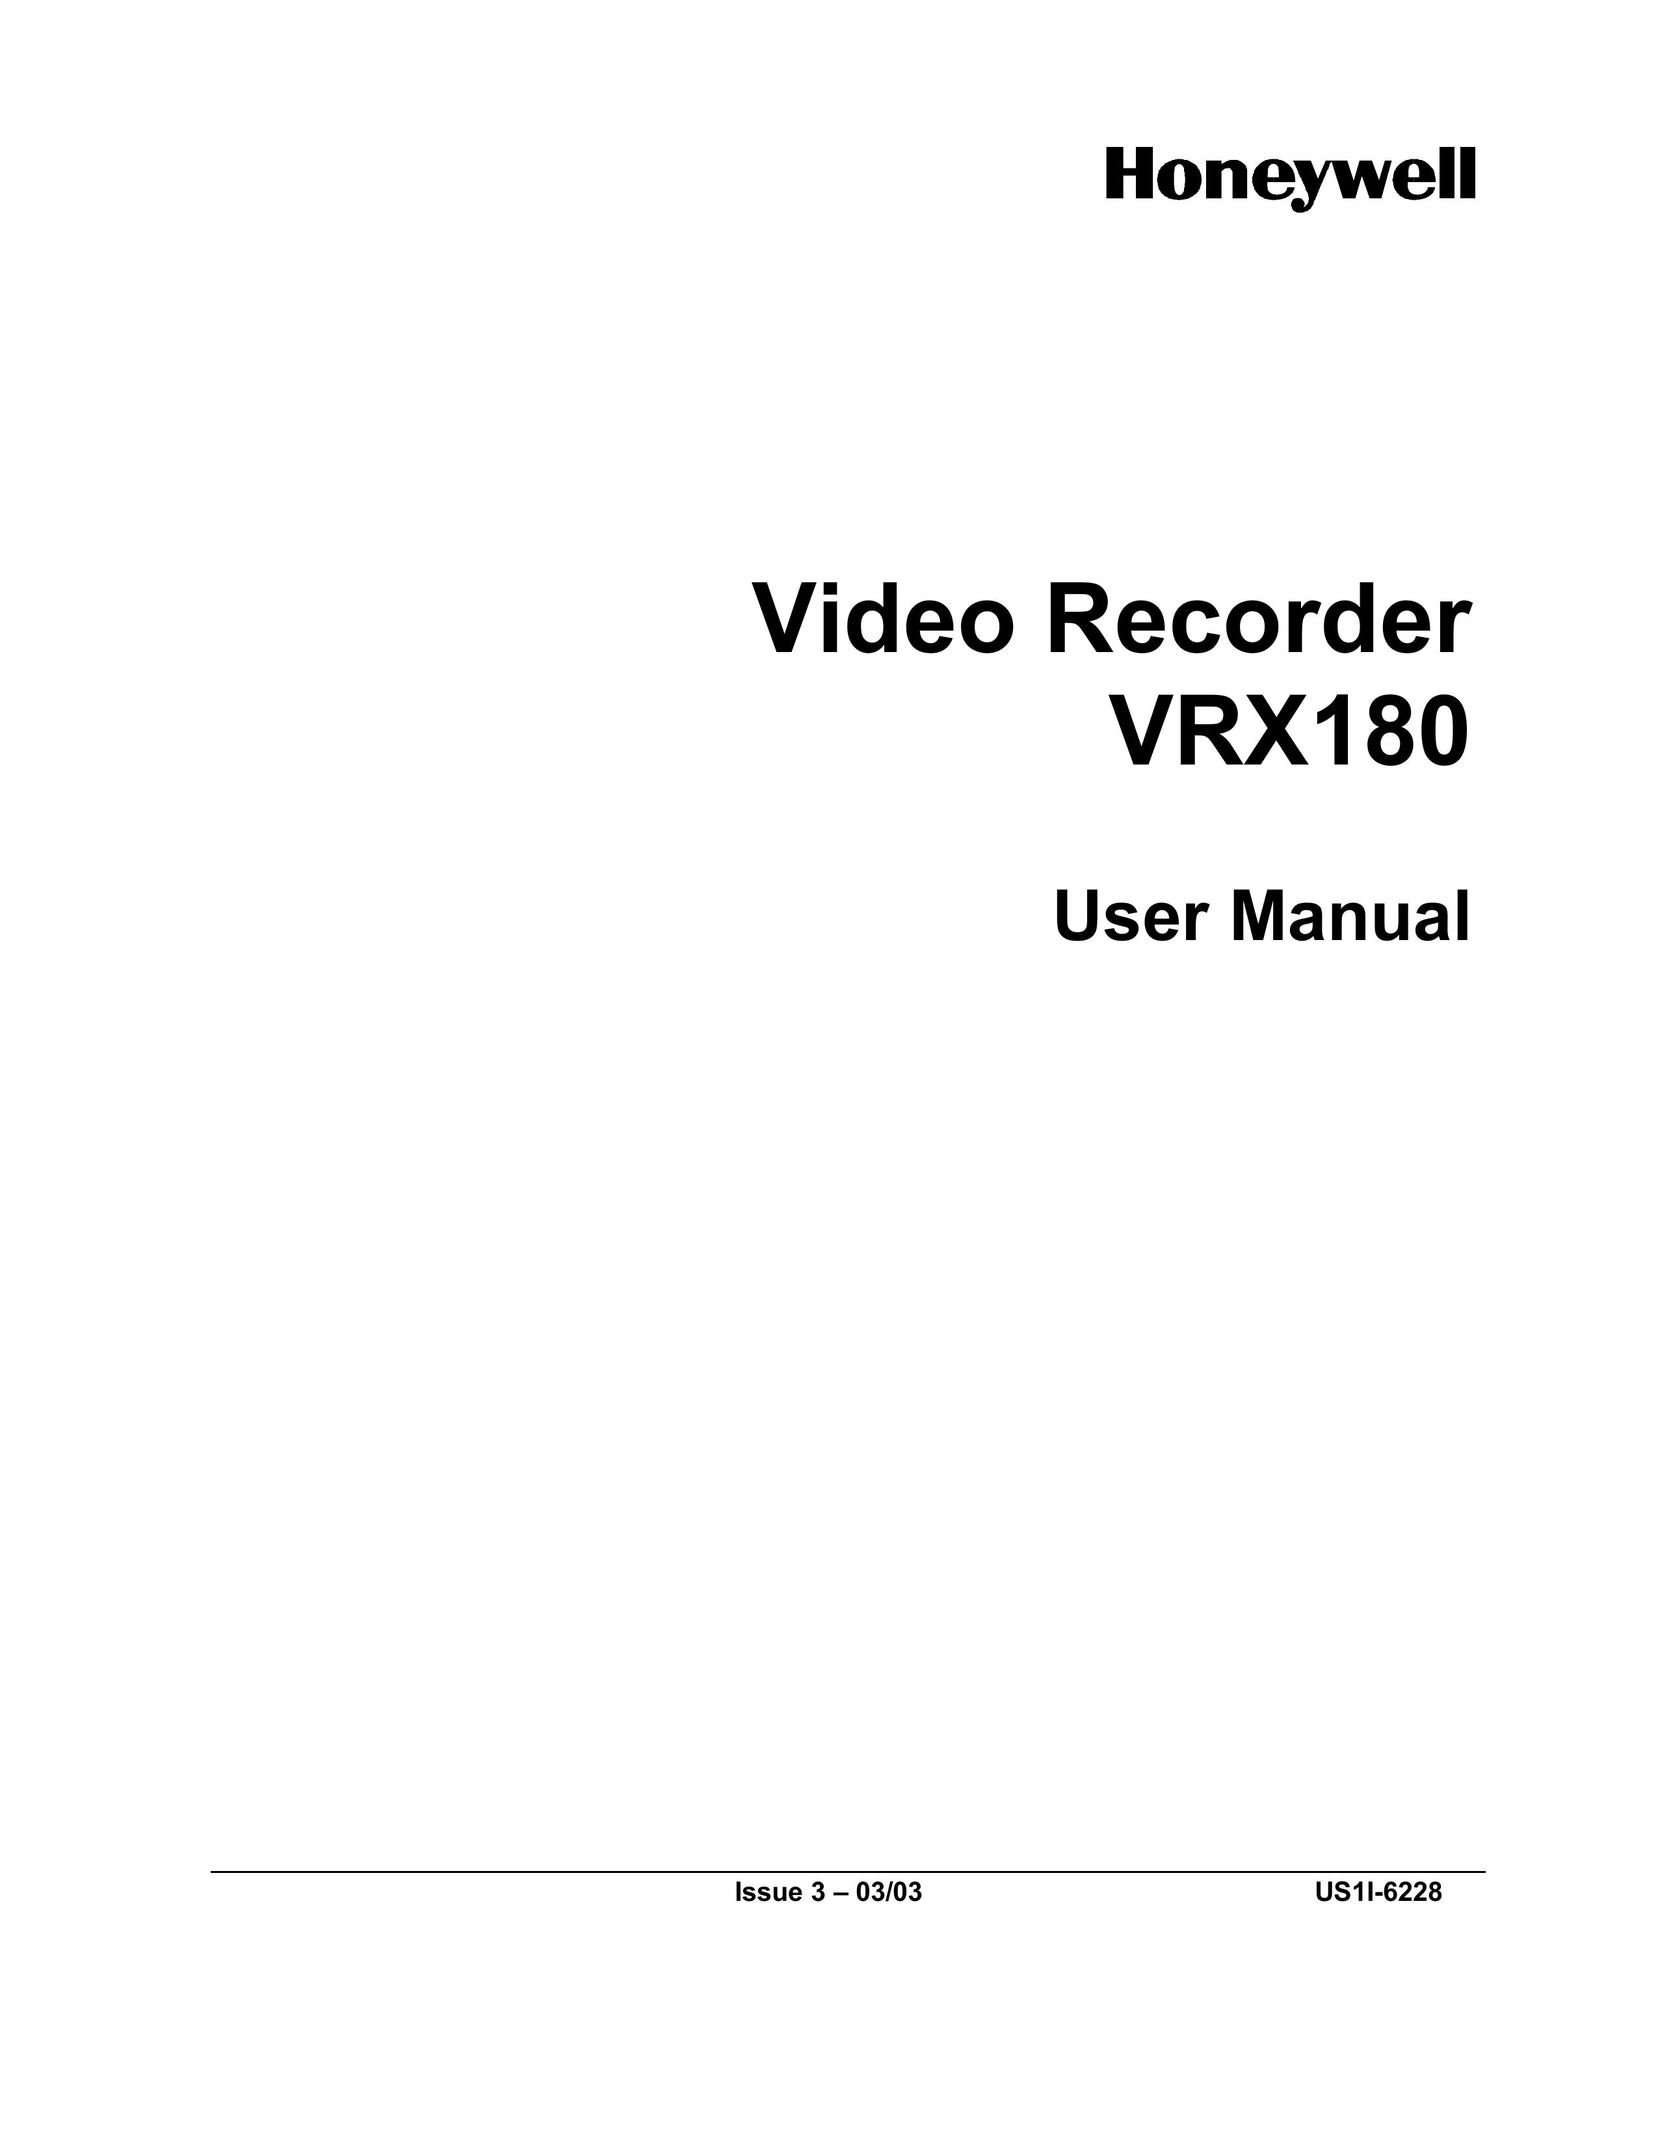 Honeywell VRX180 DVR User Manual